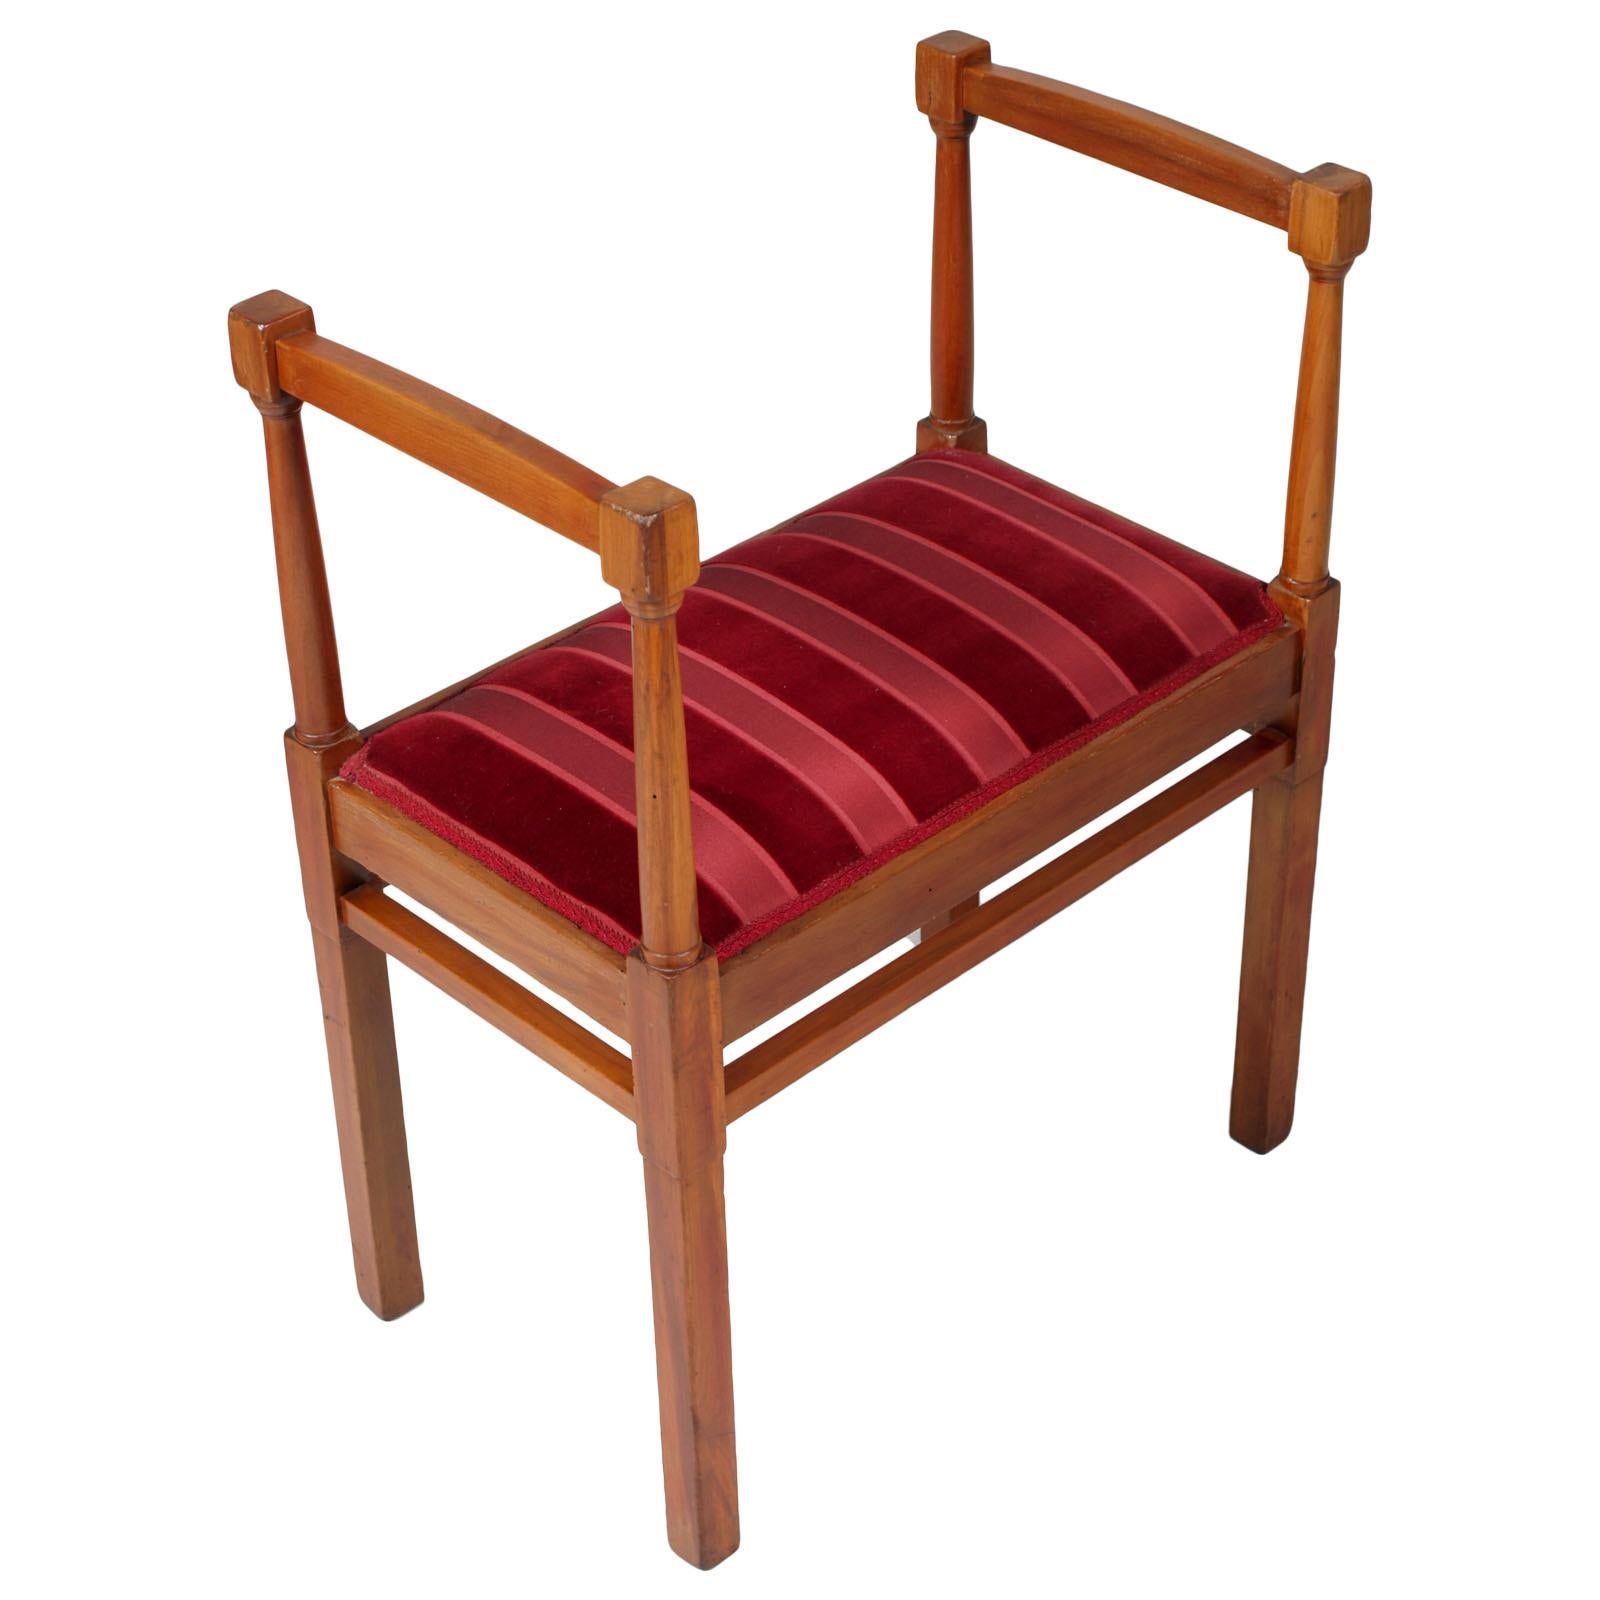 Italian Art Nouveau Side Chairs with Stool, Blond Walnut, Wax-Polished For Sale 4